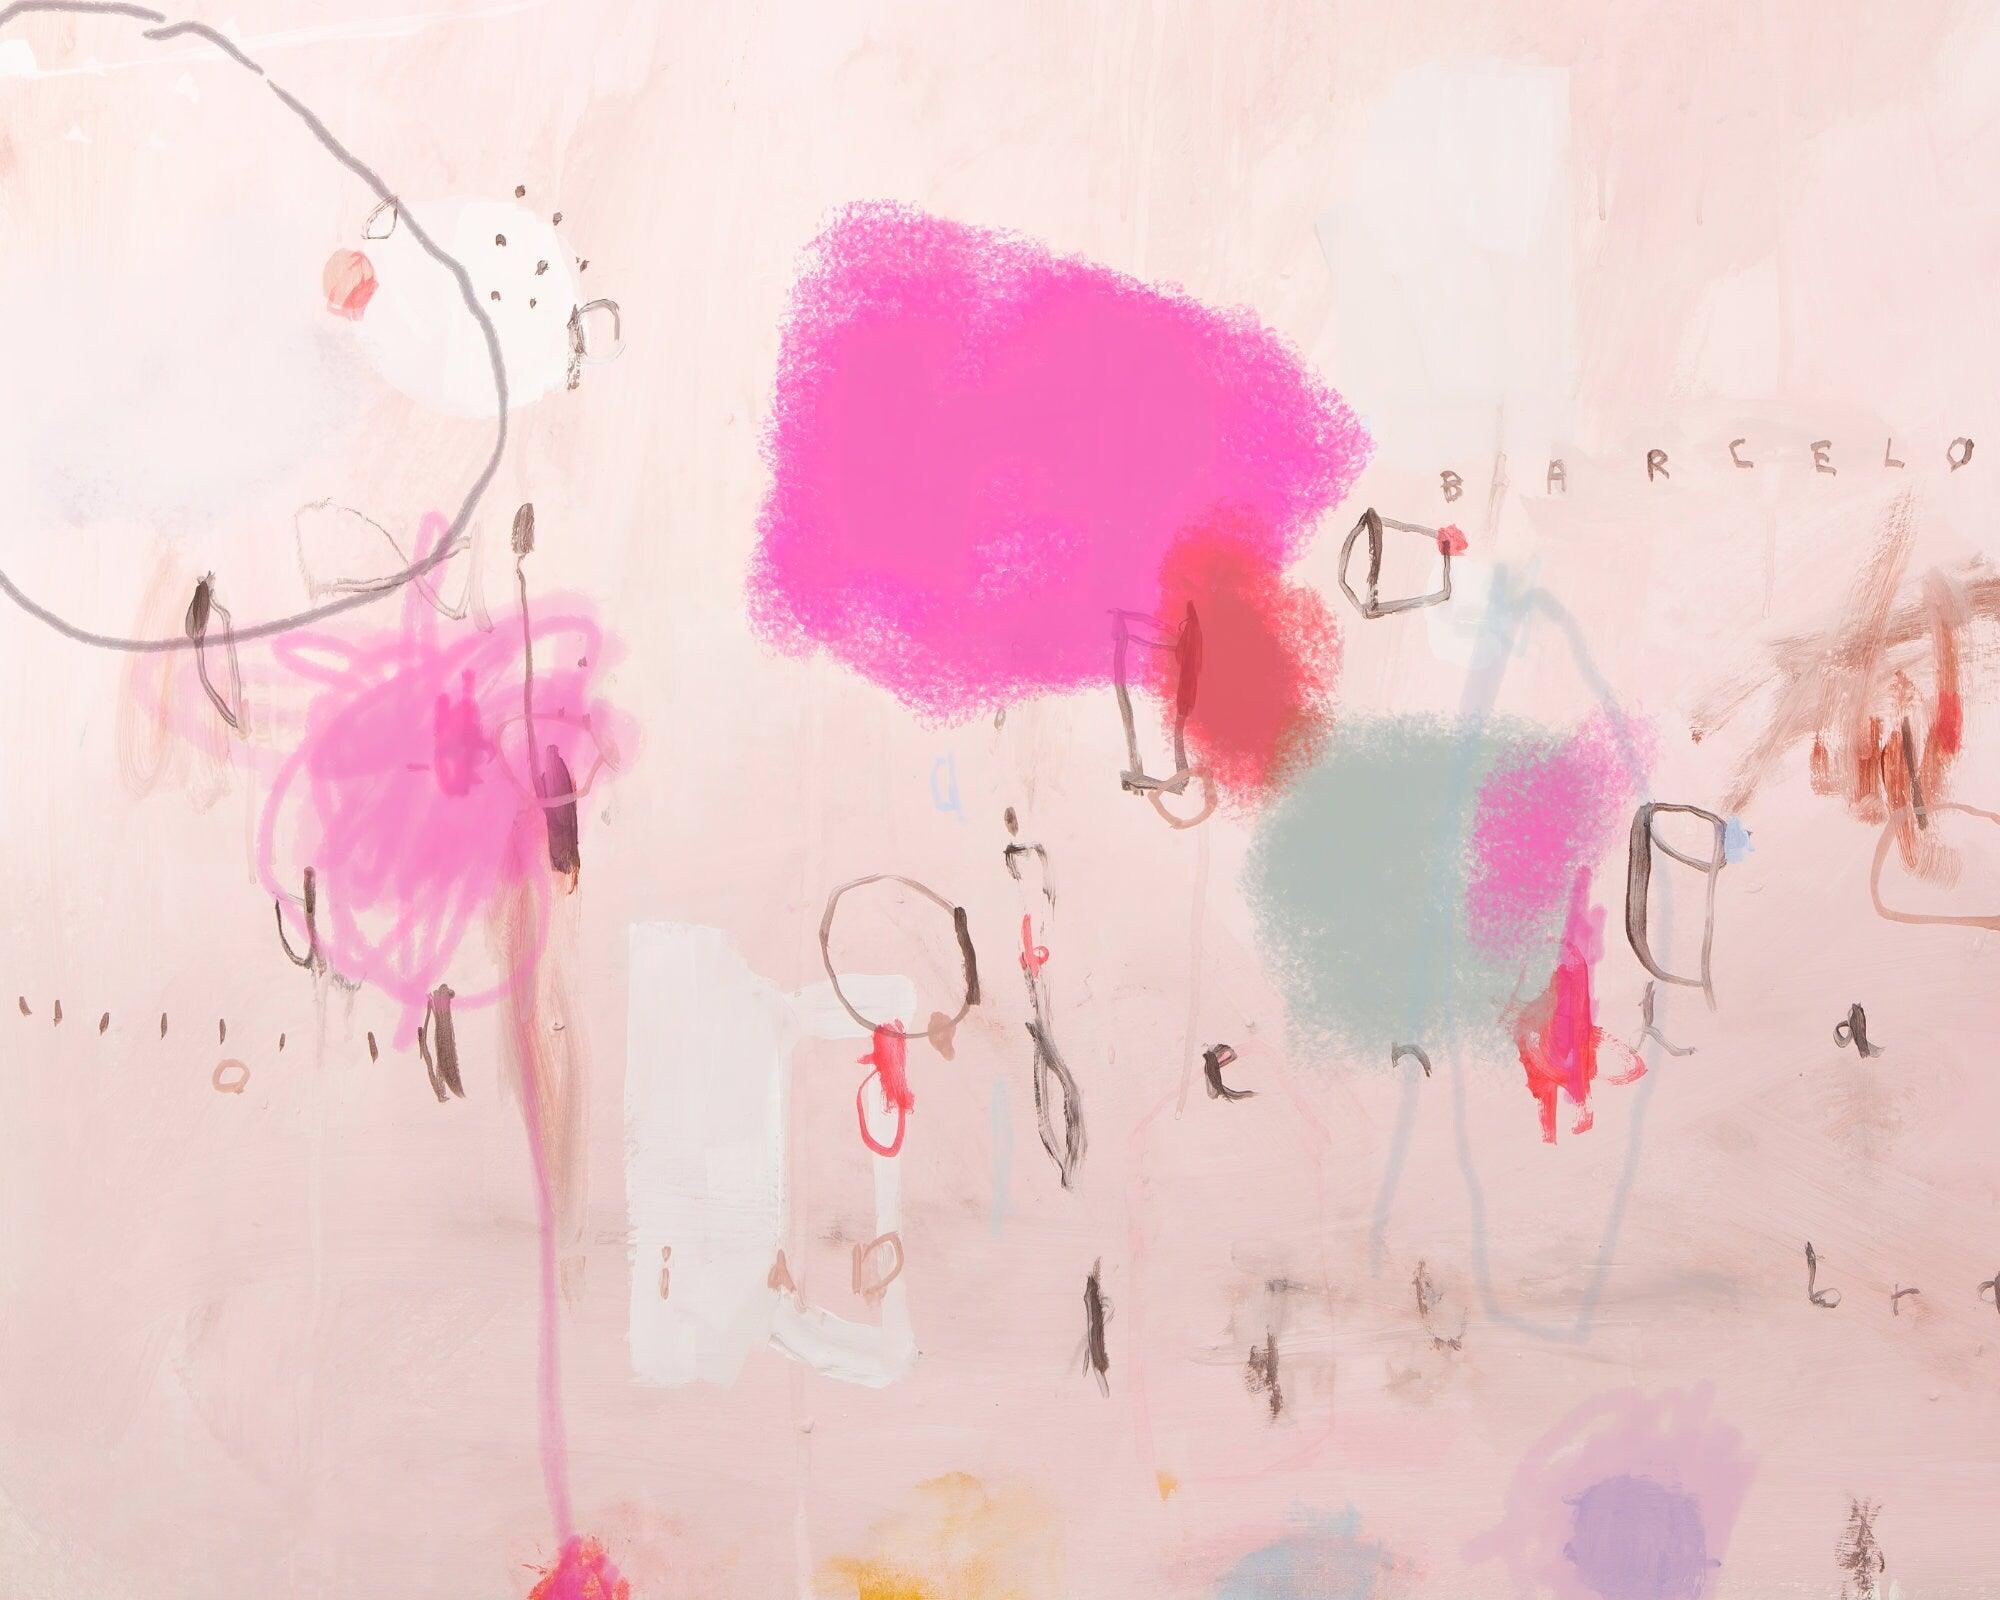 Blush pink apartment decor 24x36 art prints, 30x40 abstract wall art by Camilo Mattis